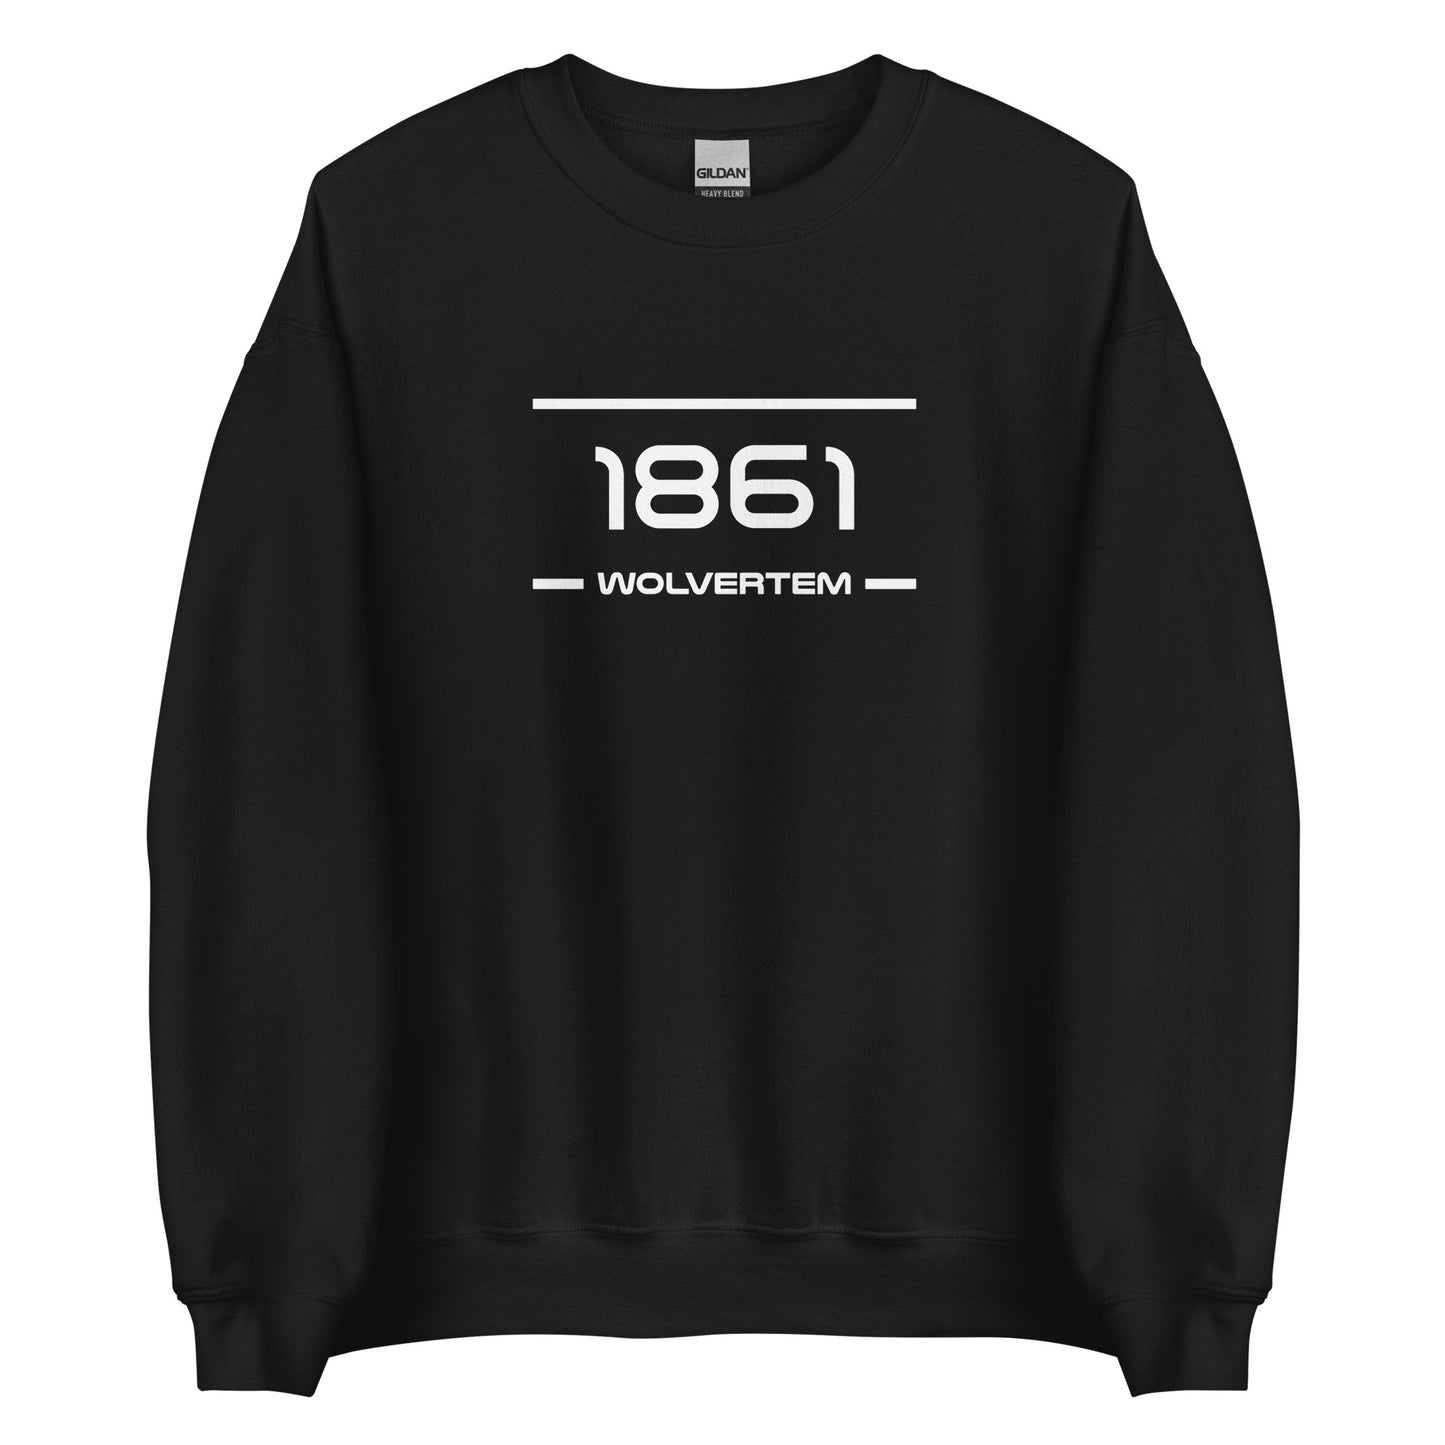 Sweater - 1861 - Wolvertem (M/V)